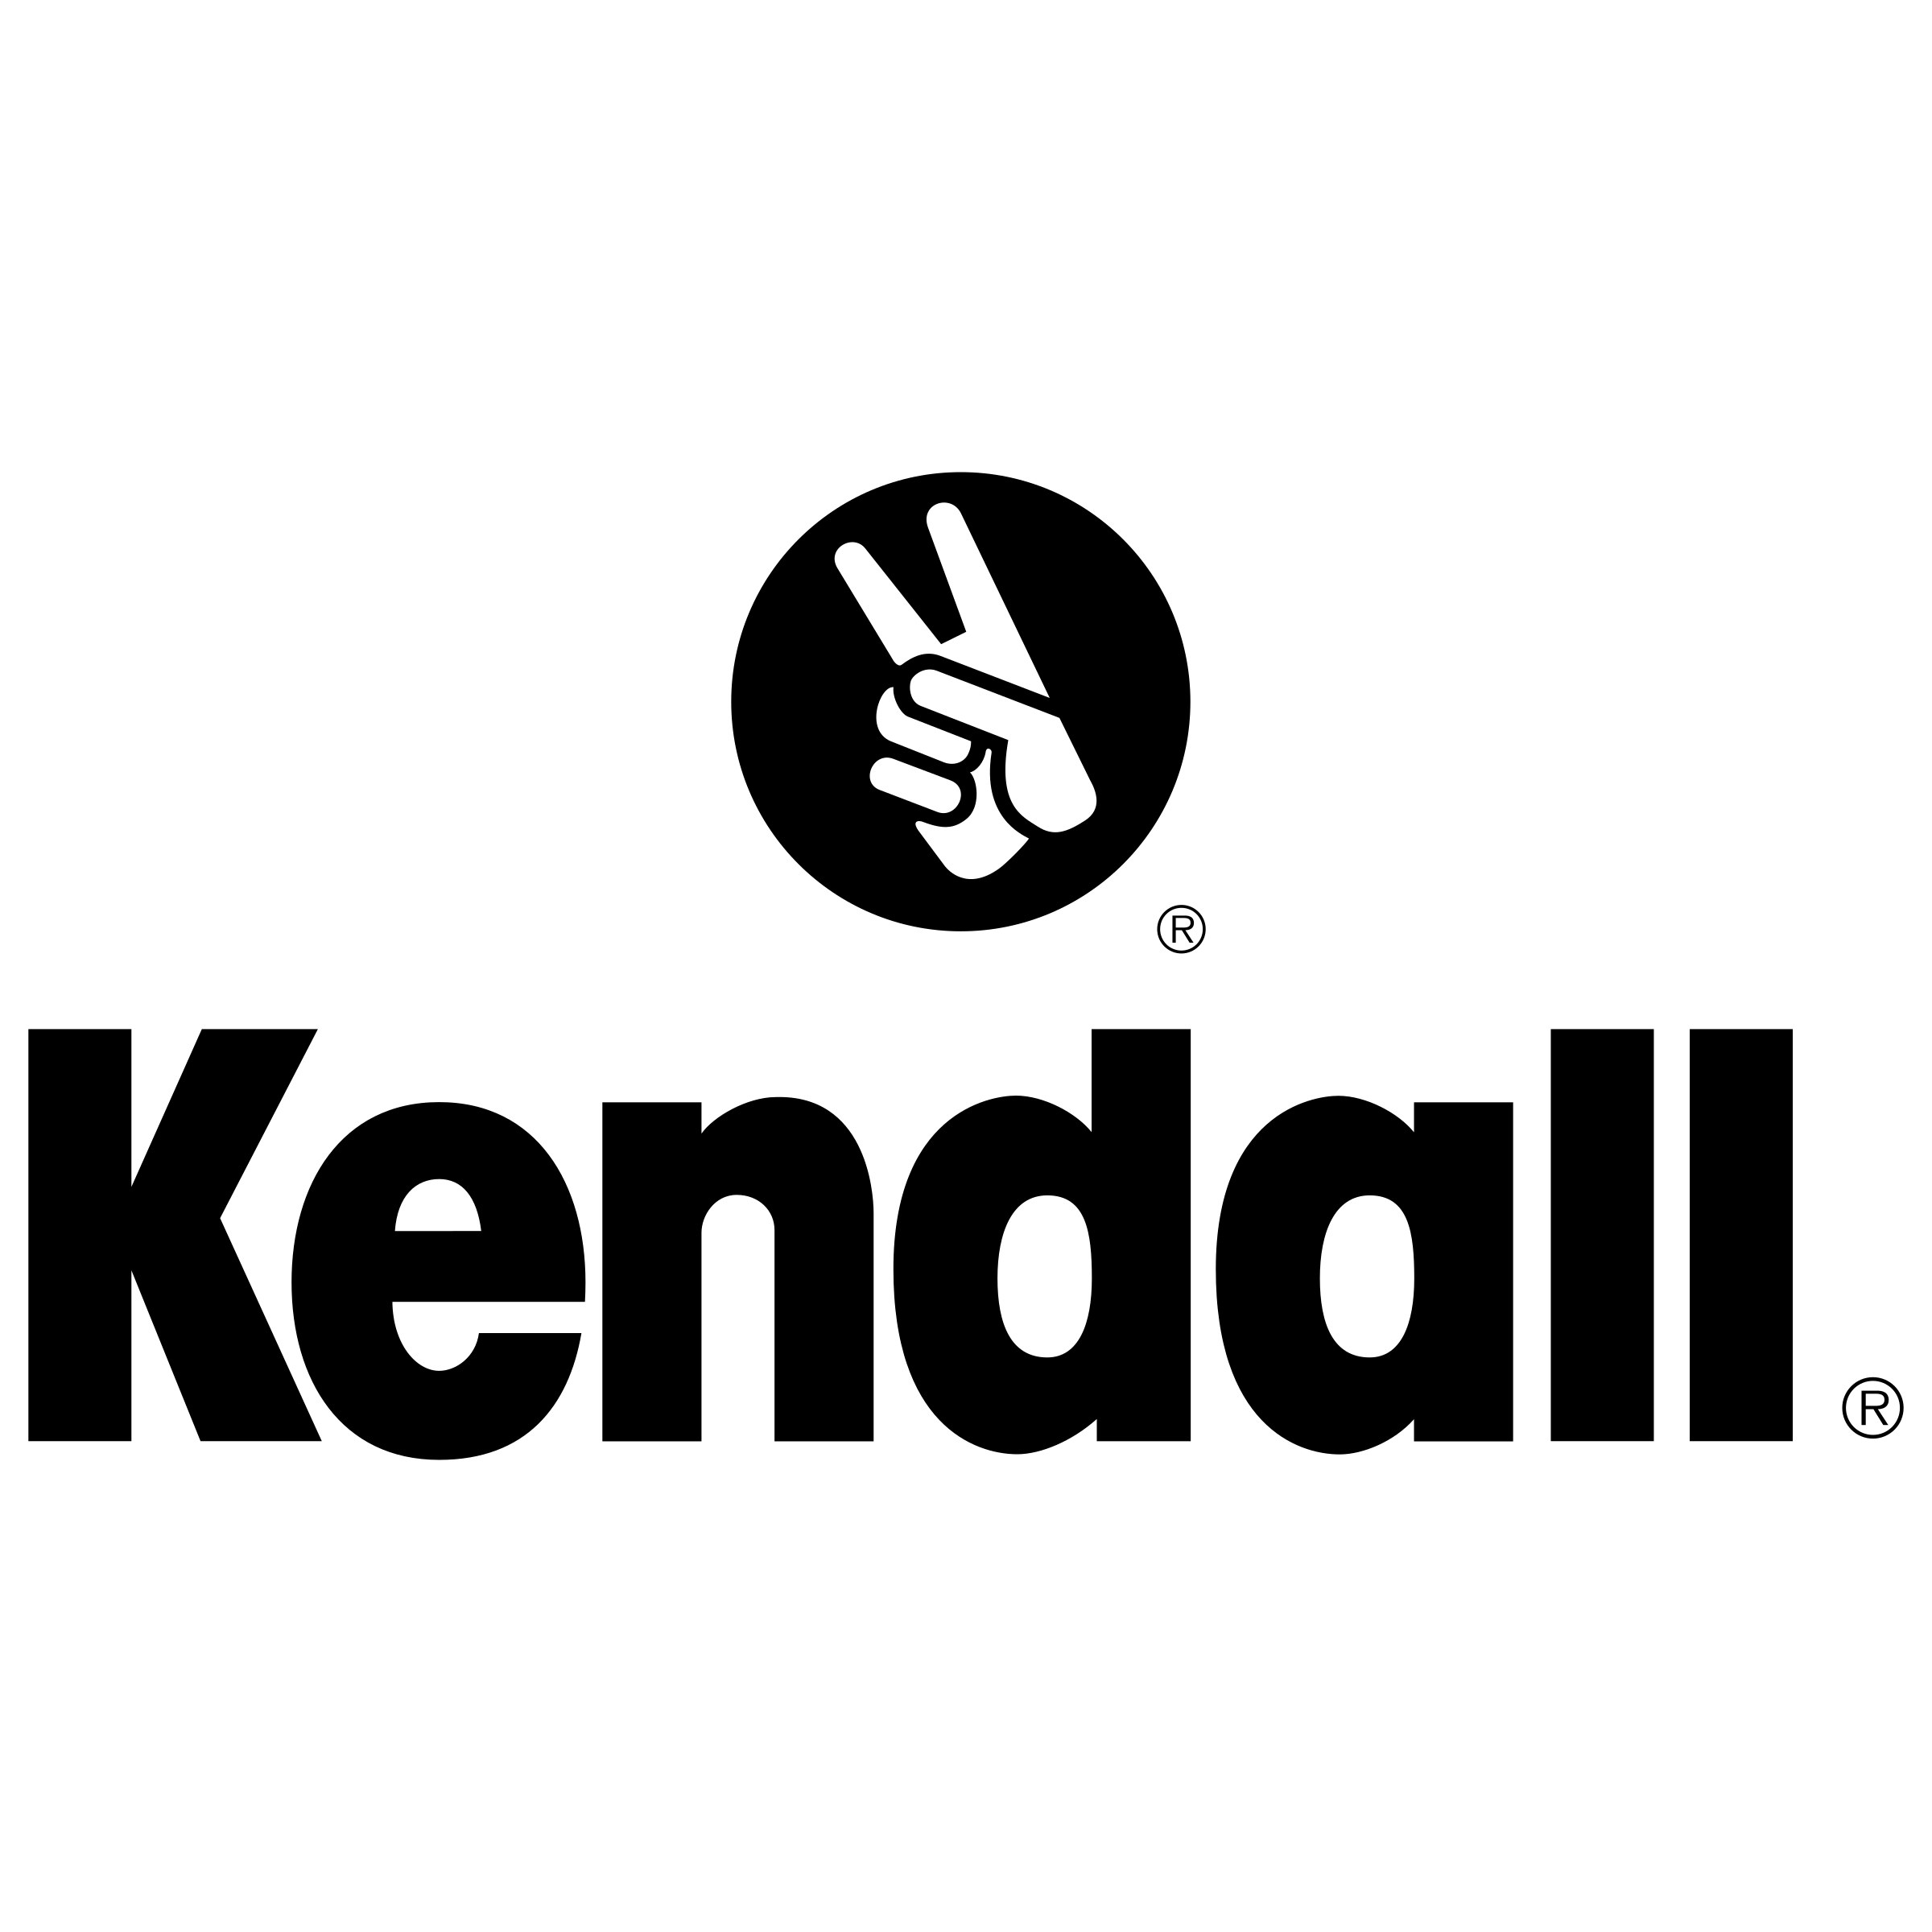 Kendall Logo - Kendall Logo PNG Transparent & SVG Vector - Freebie Supply